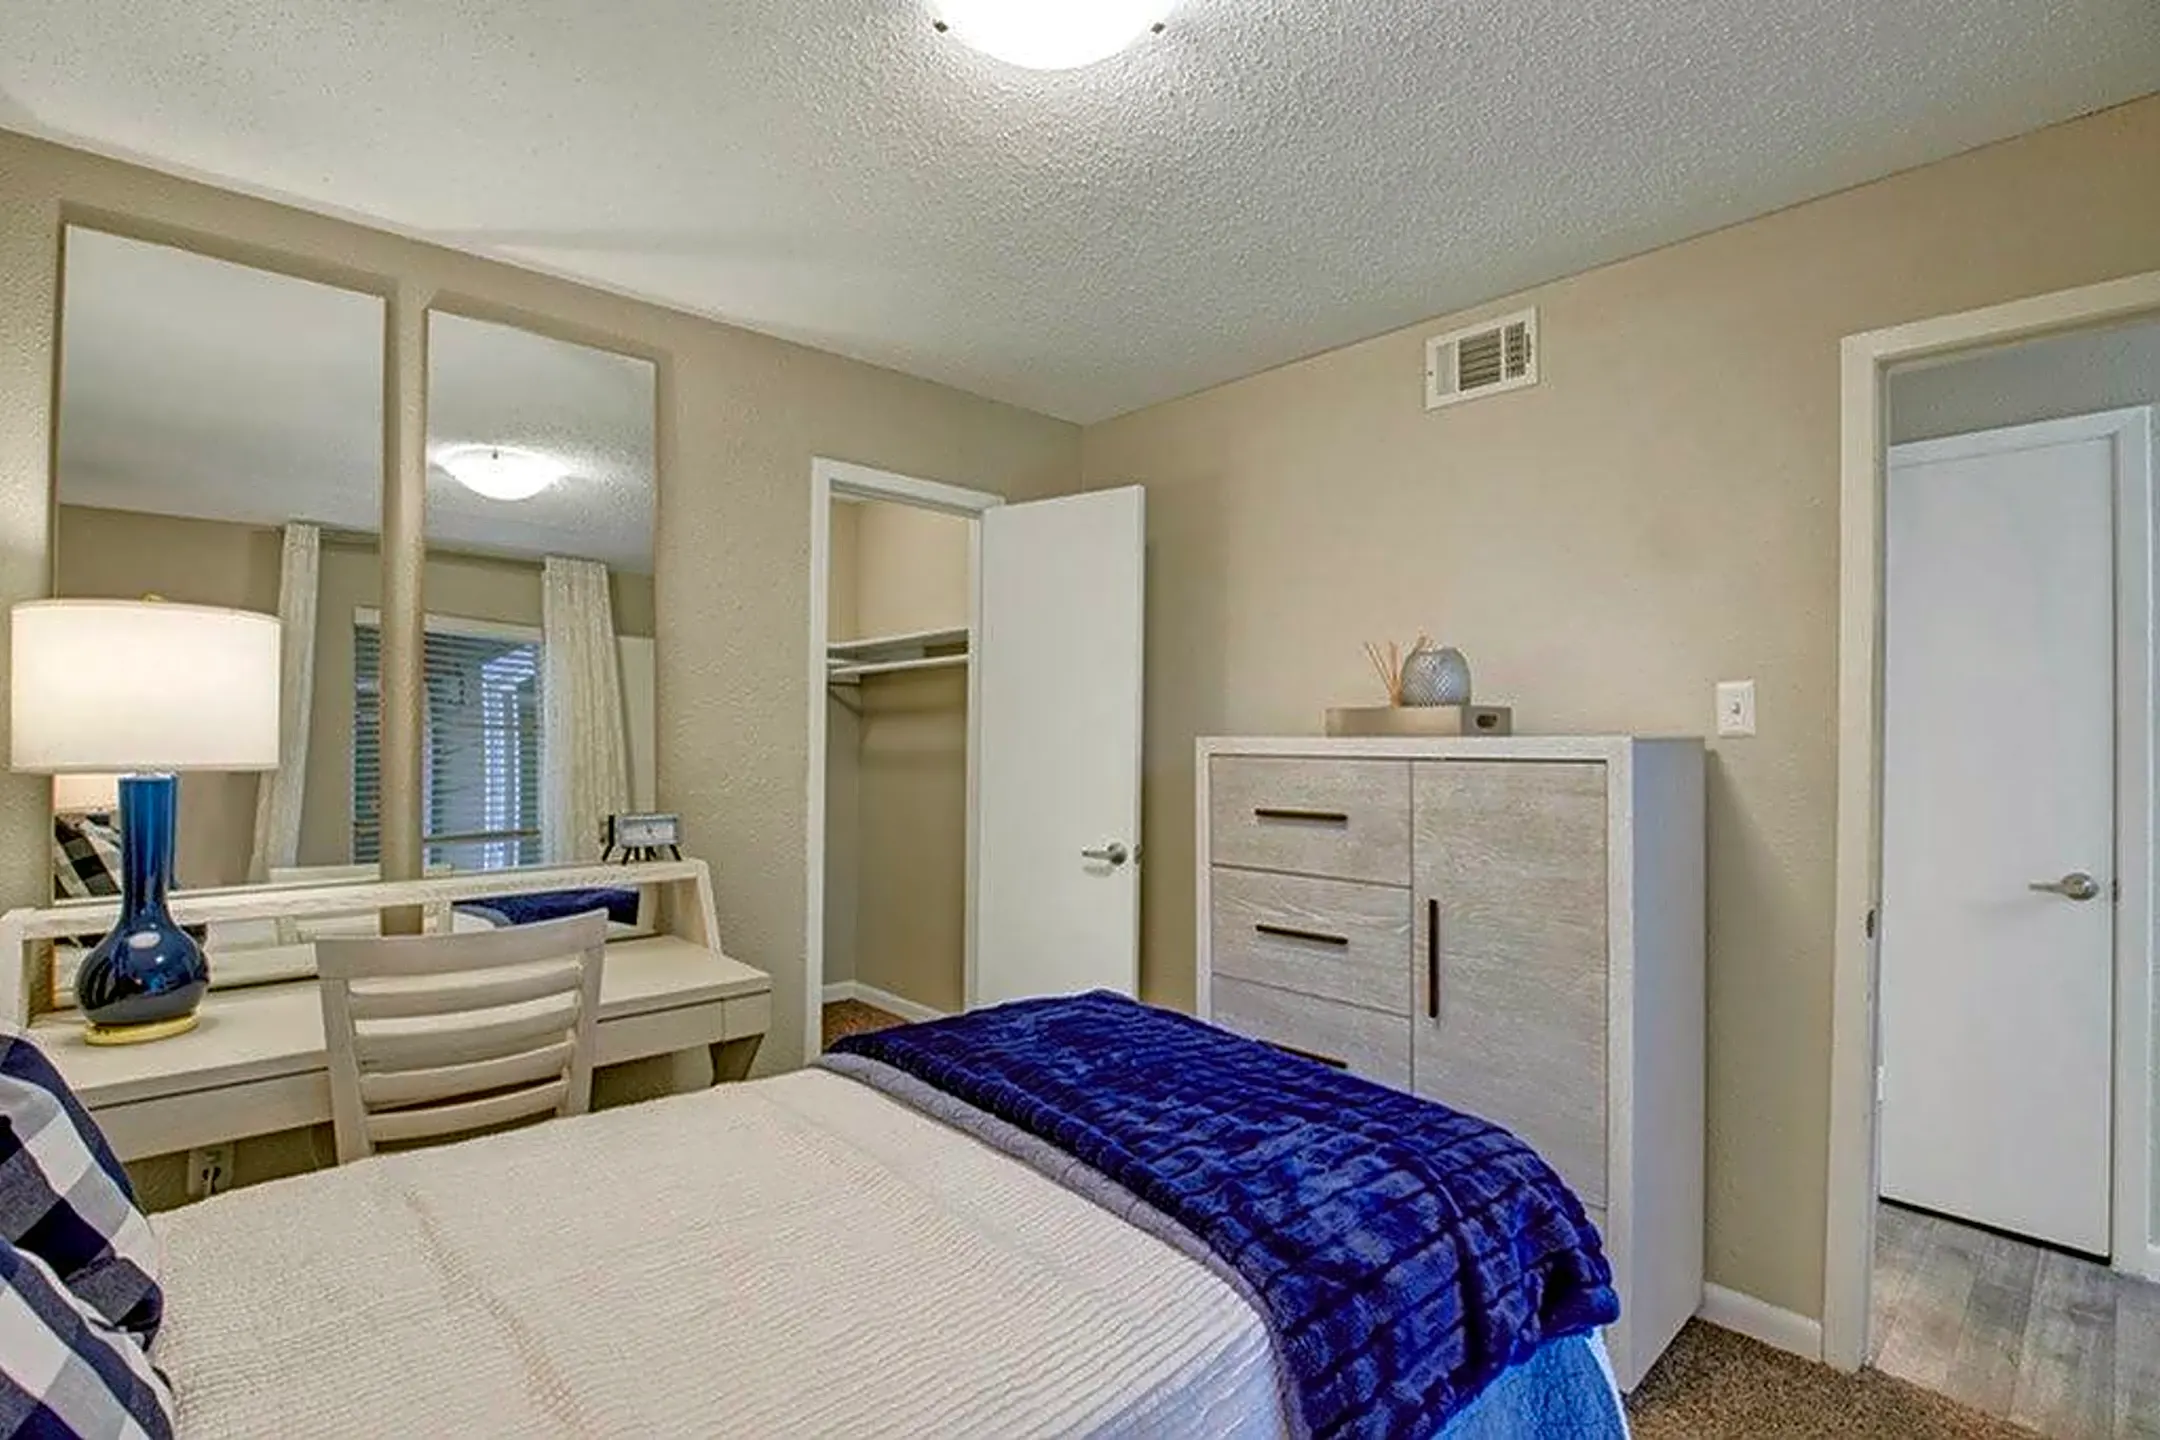 Bedroom - Puerto Del Mar Apartments - Corpus Christi, TX